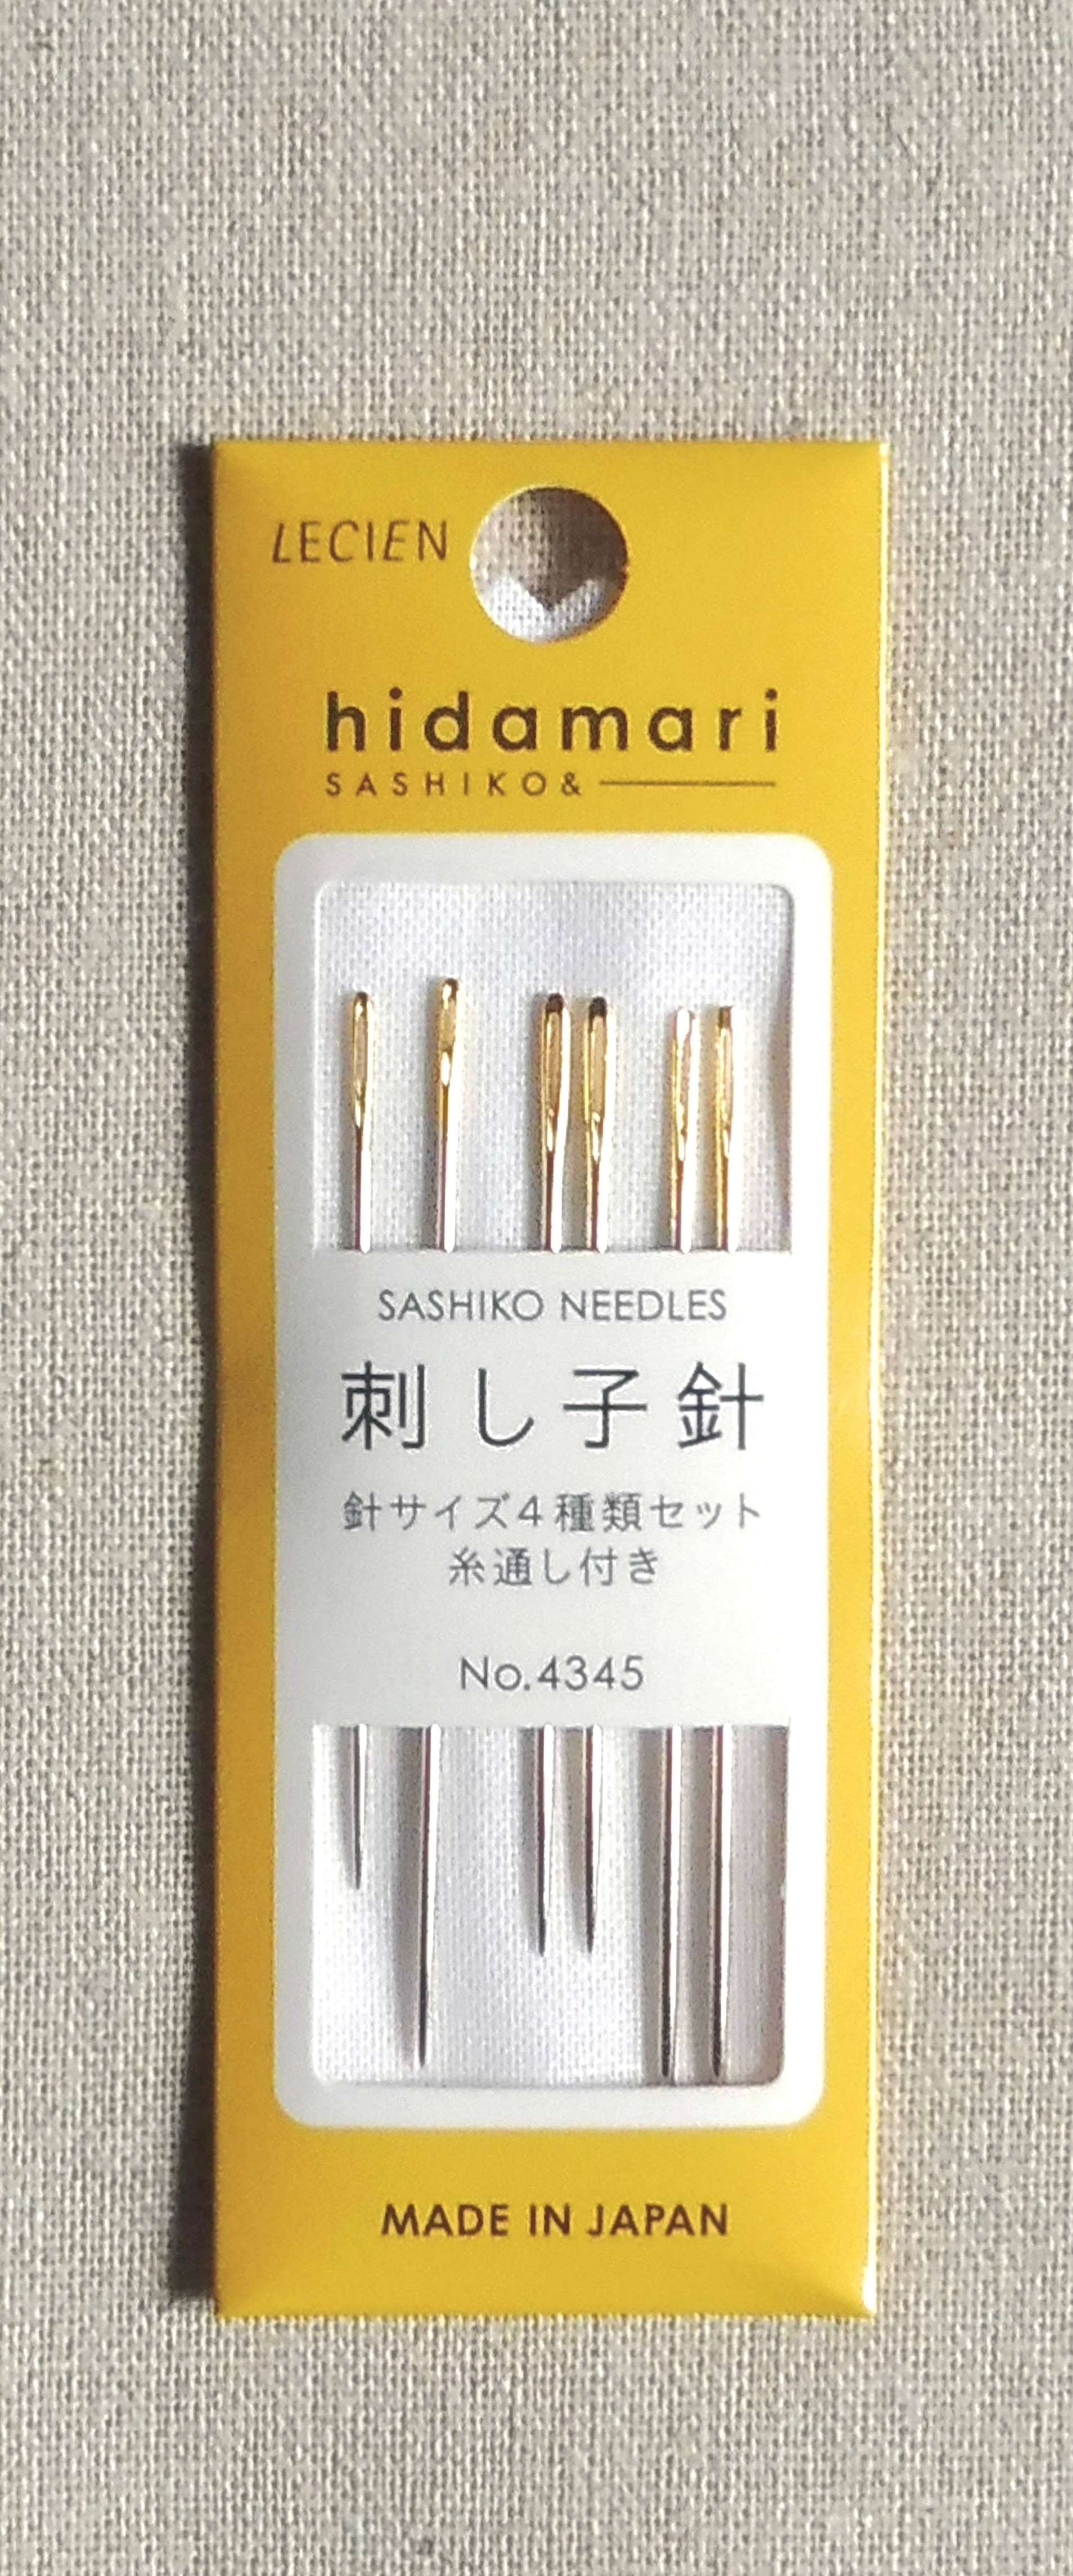 Hidamari Sashiko needles